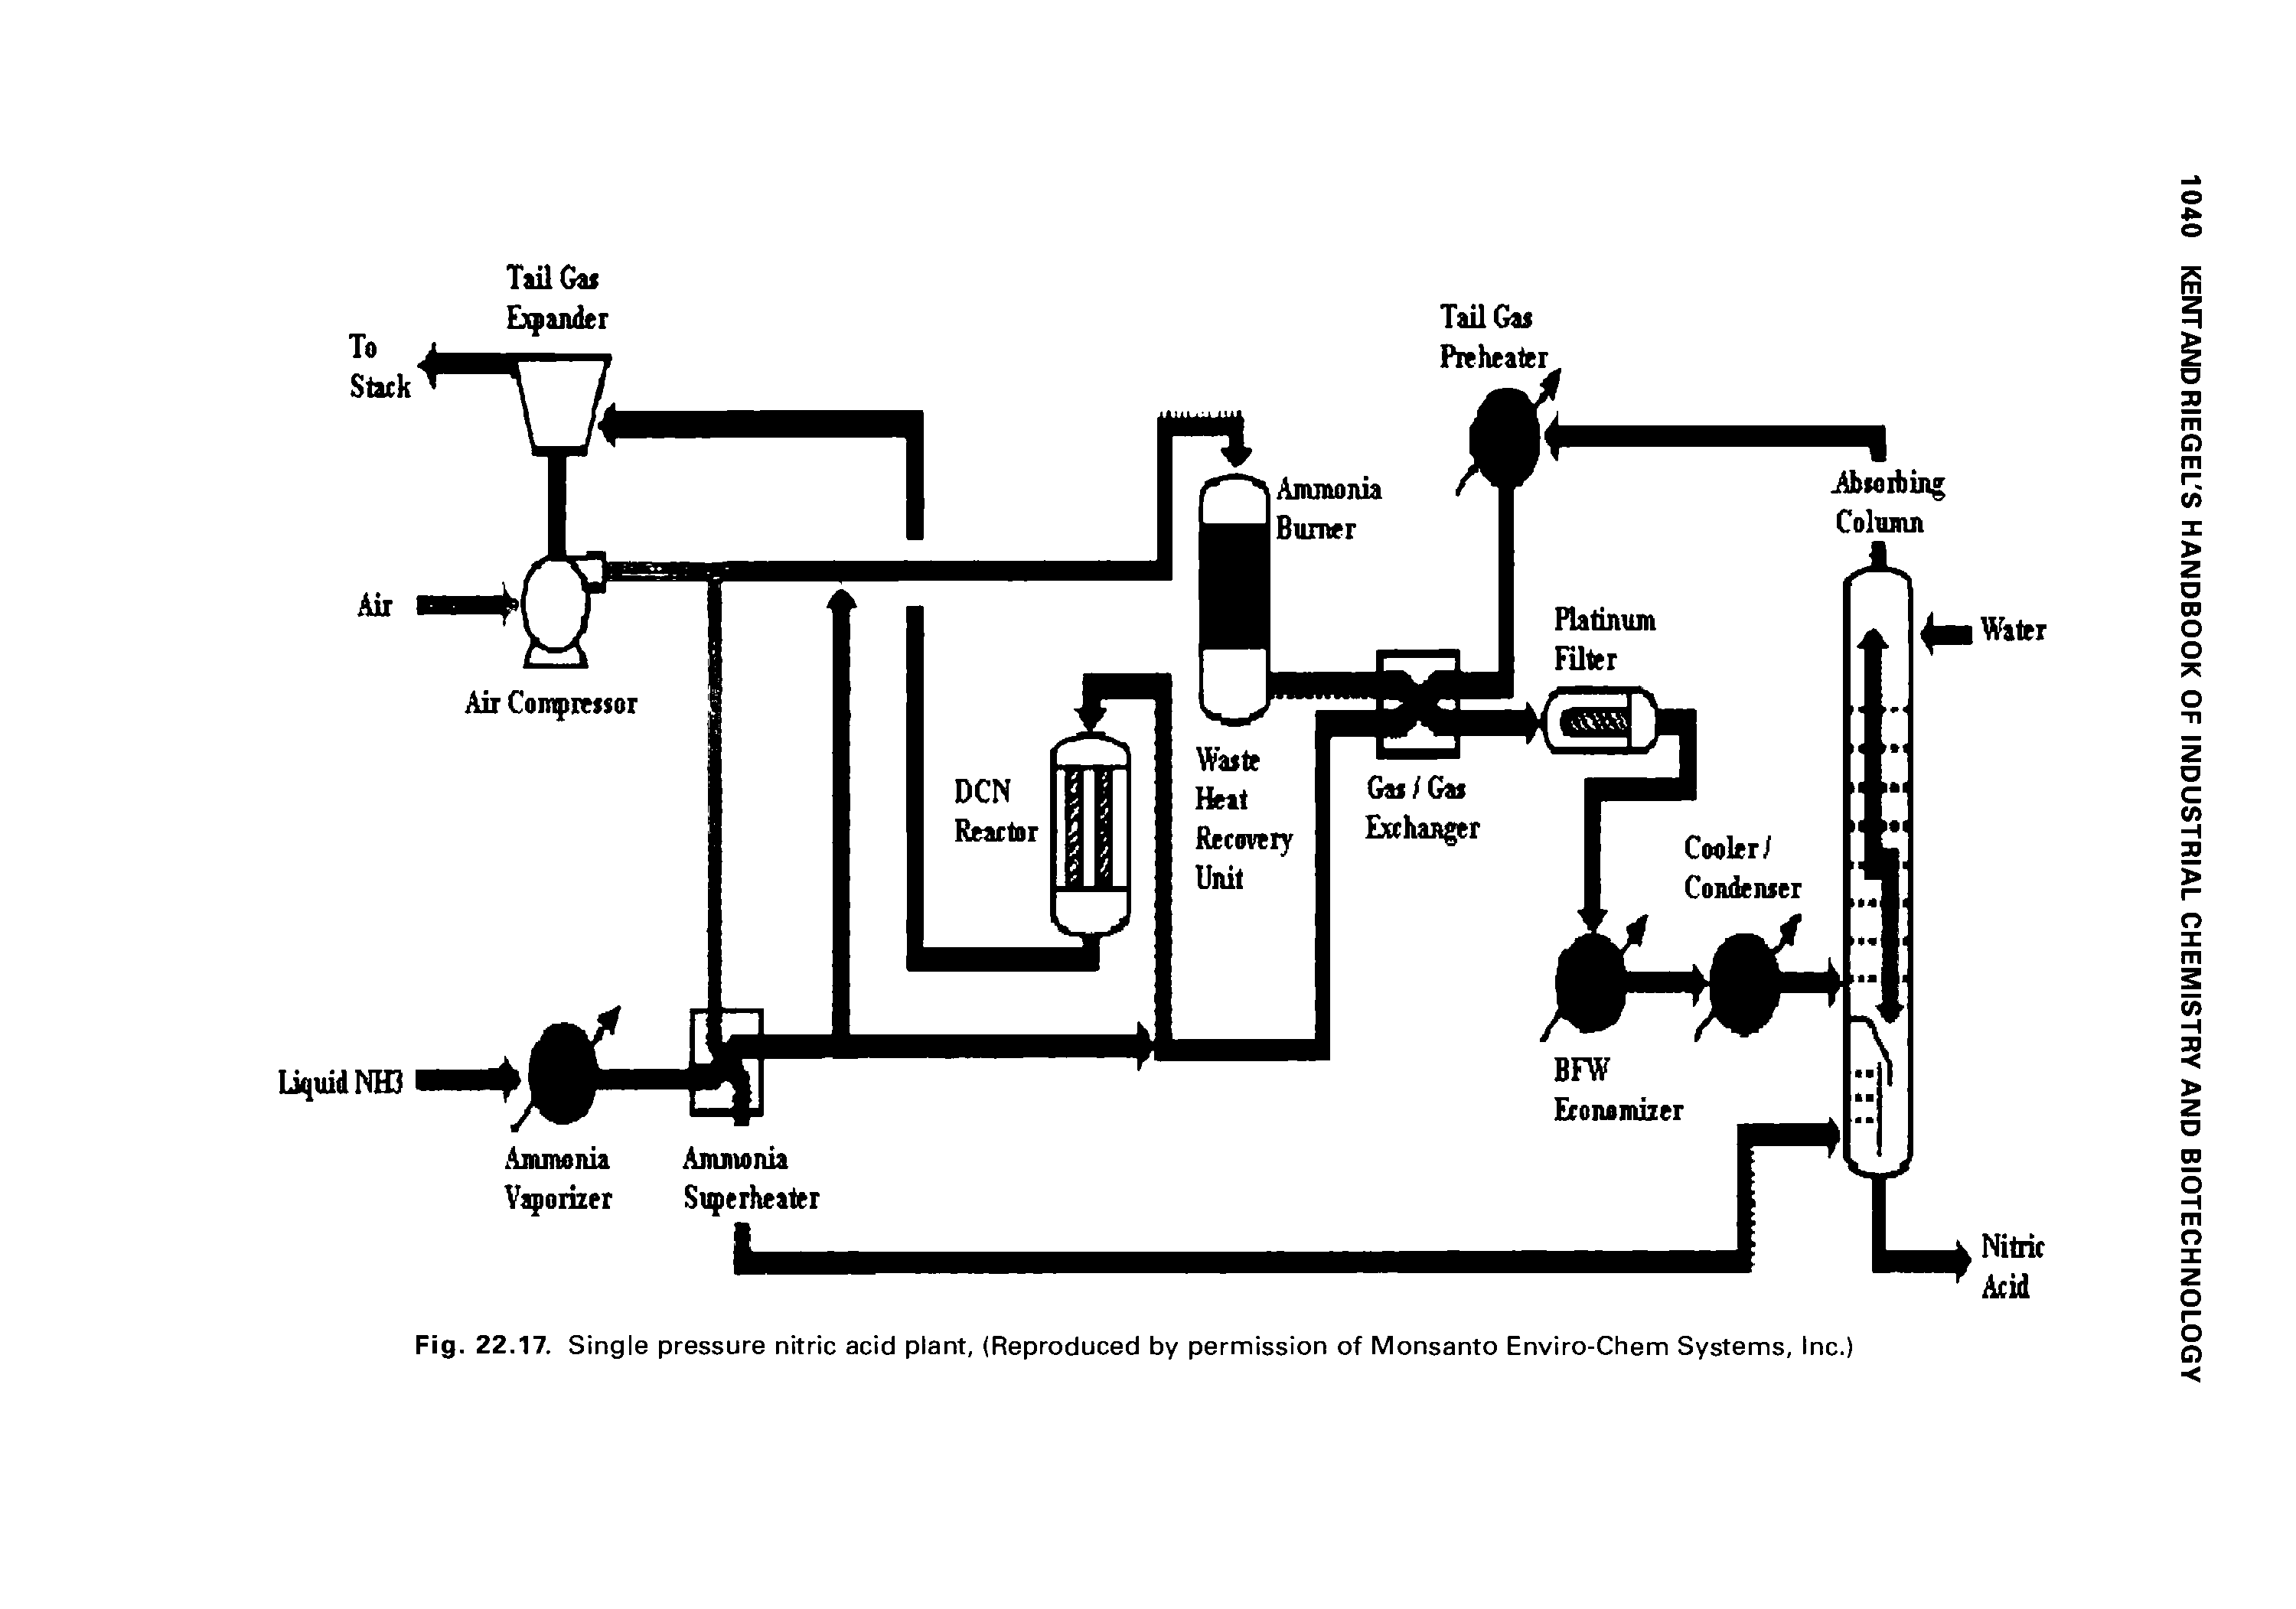 Fig. 22.17. Single pressure nitric acid plant, (Reproduced by permission of Monsanto Enviro-Chem Systems, Inc.)...